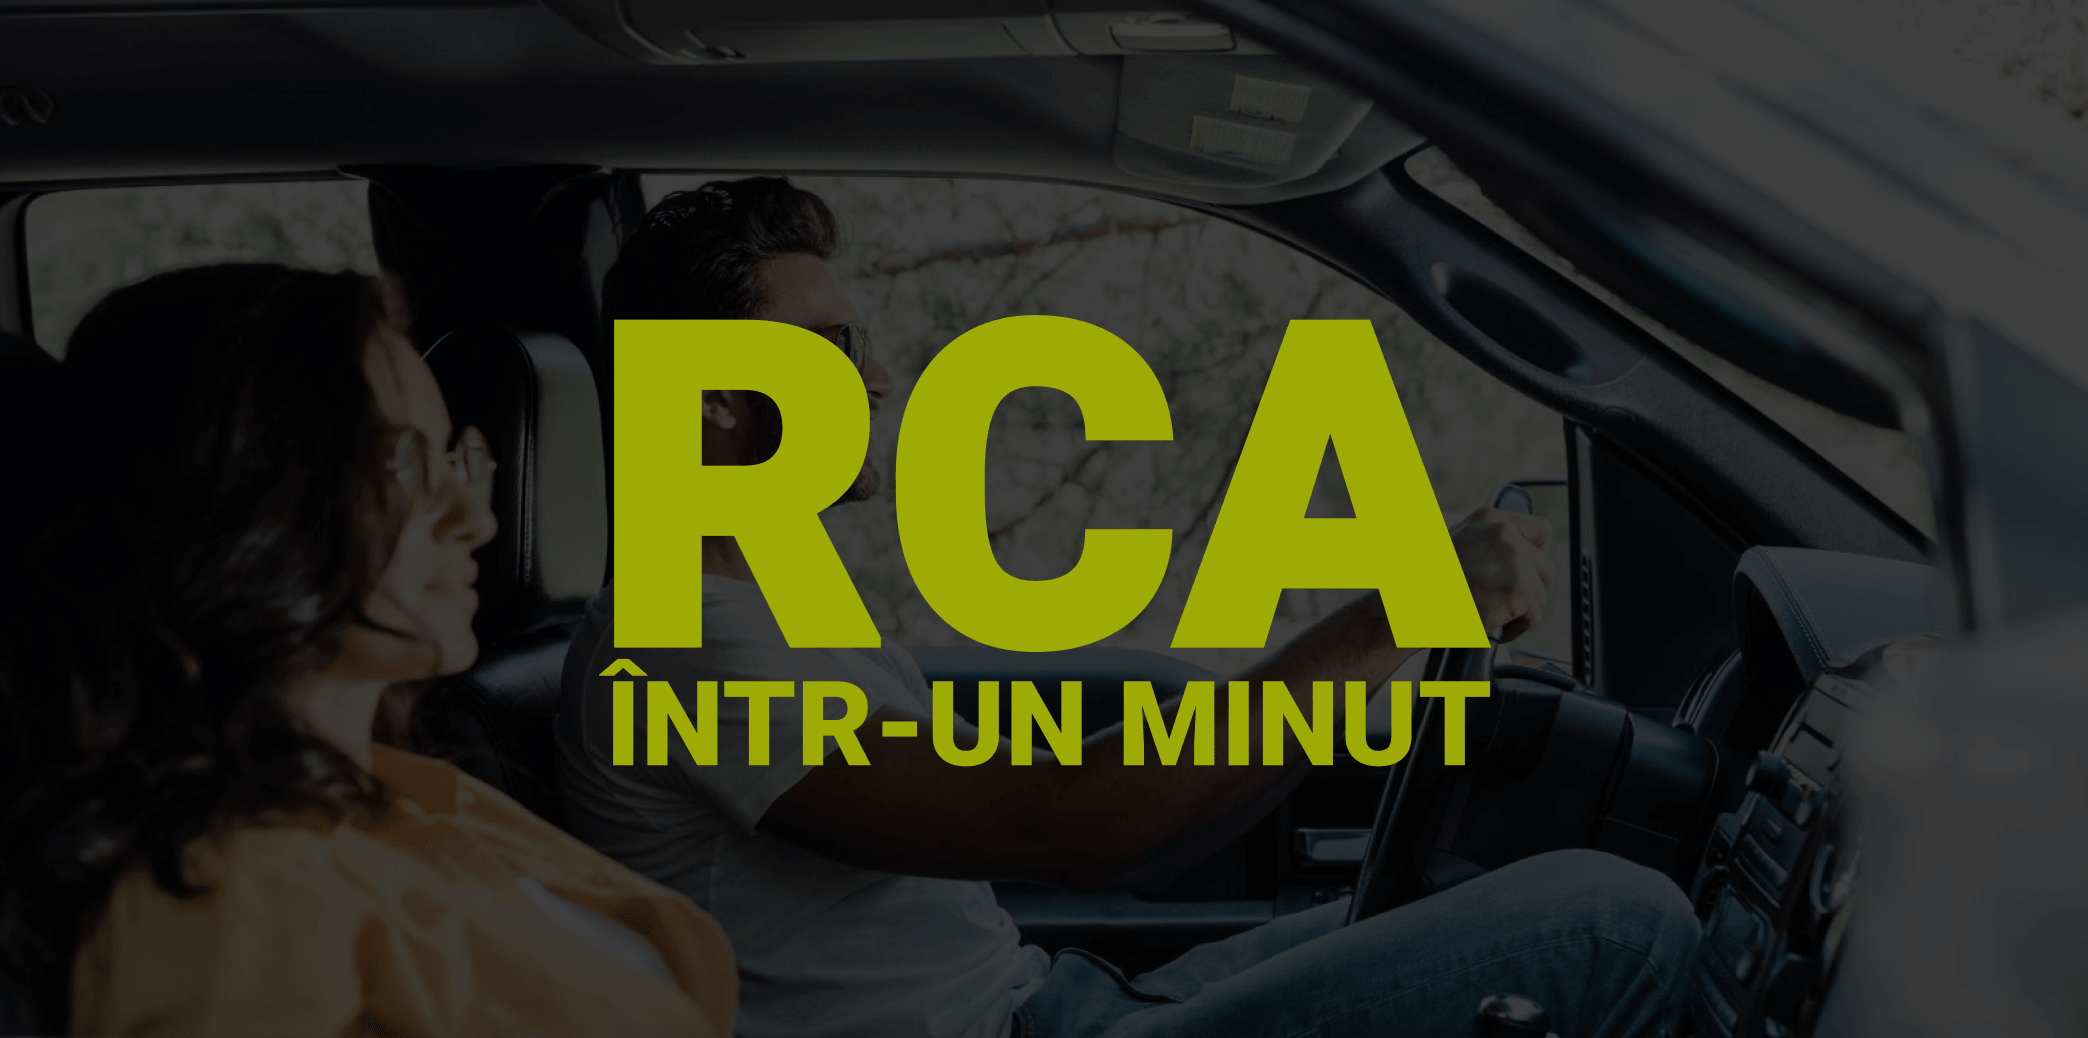 Am lansat platforma de emitere online RCA intr-un minut ...